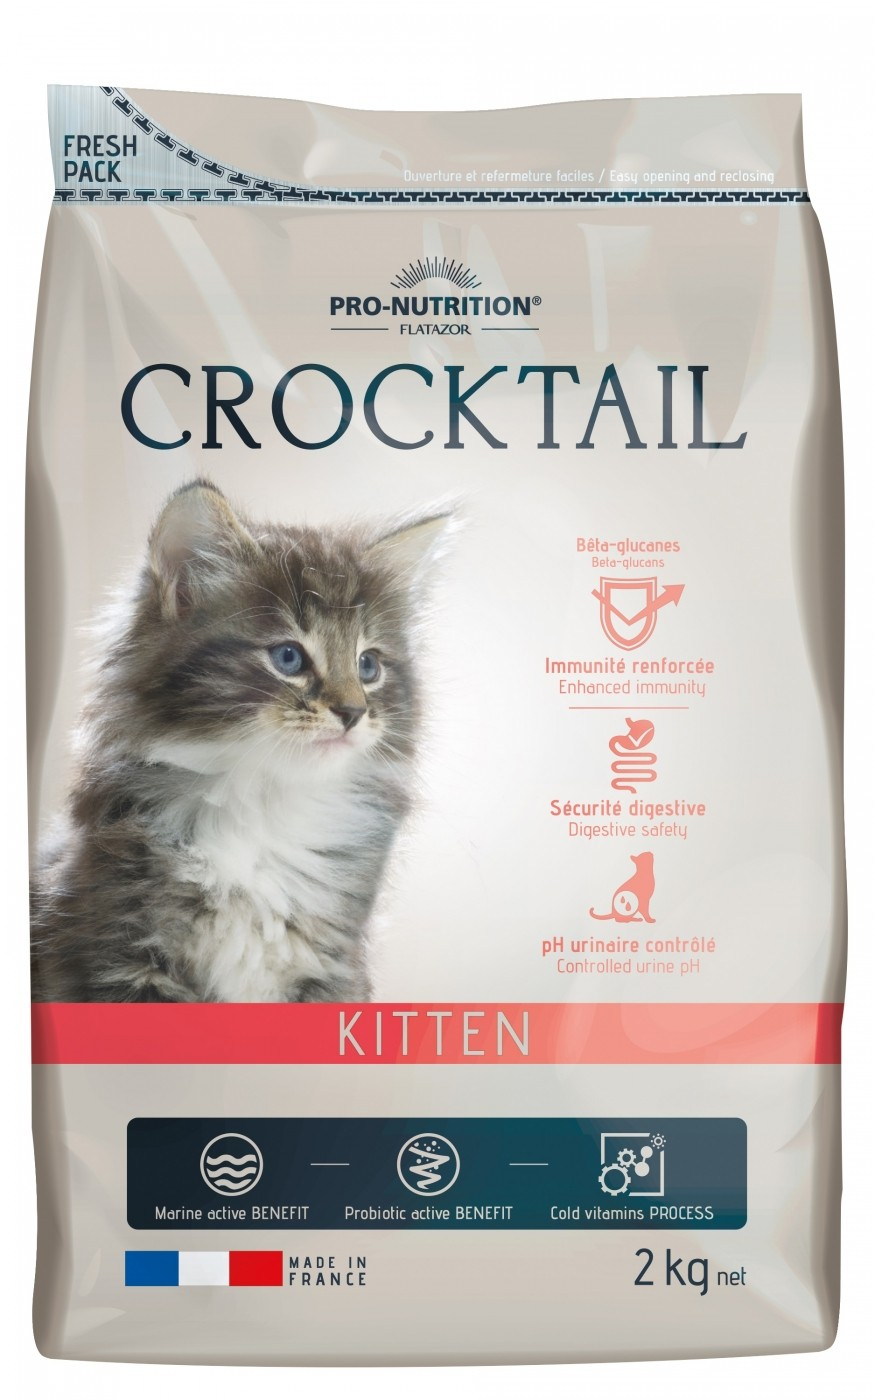 PRO-NUTRITION Flatazor CROCKTAIL Kitten Pienso para gatitos